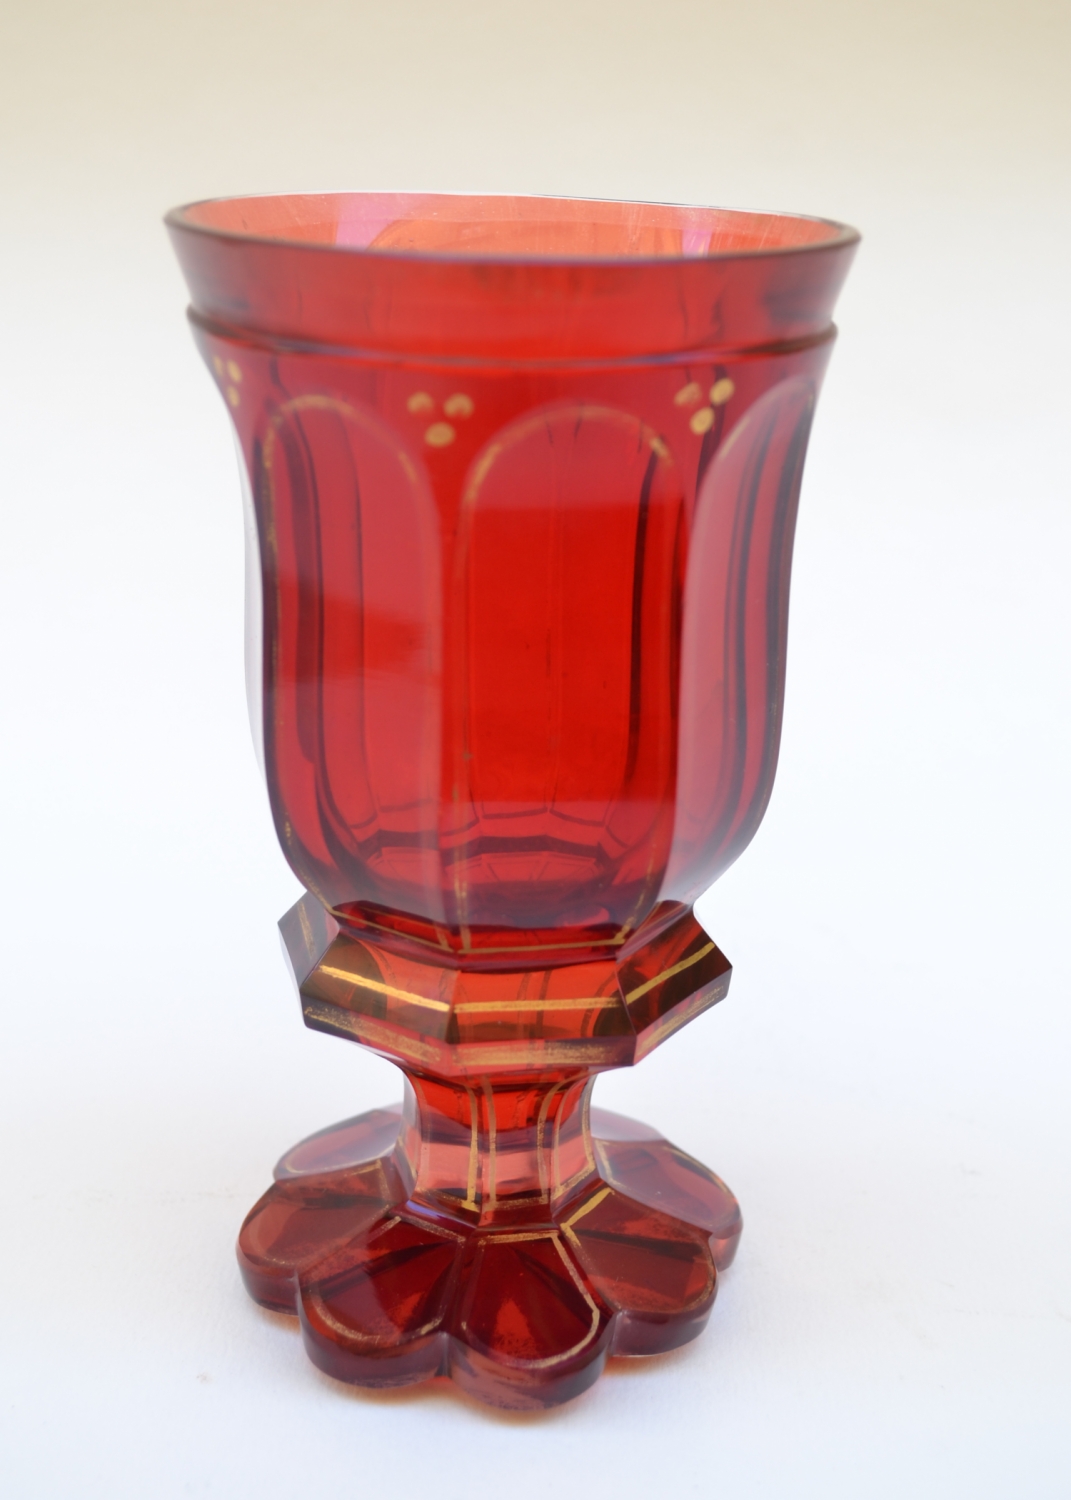 Sklenka – pohár z rubínového skla